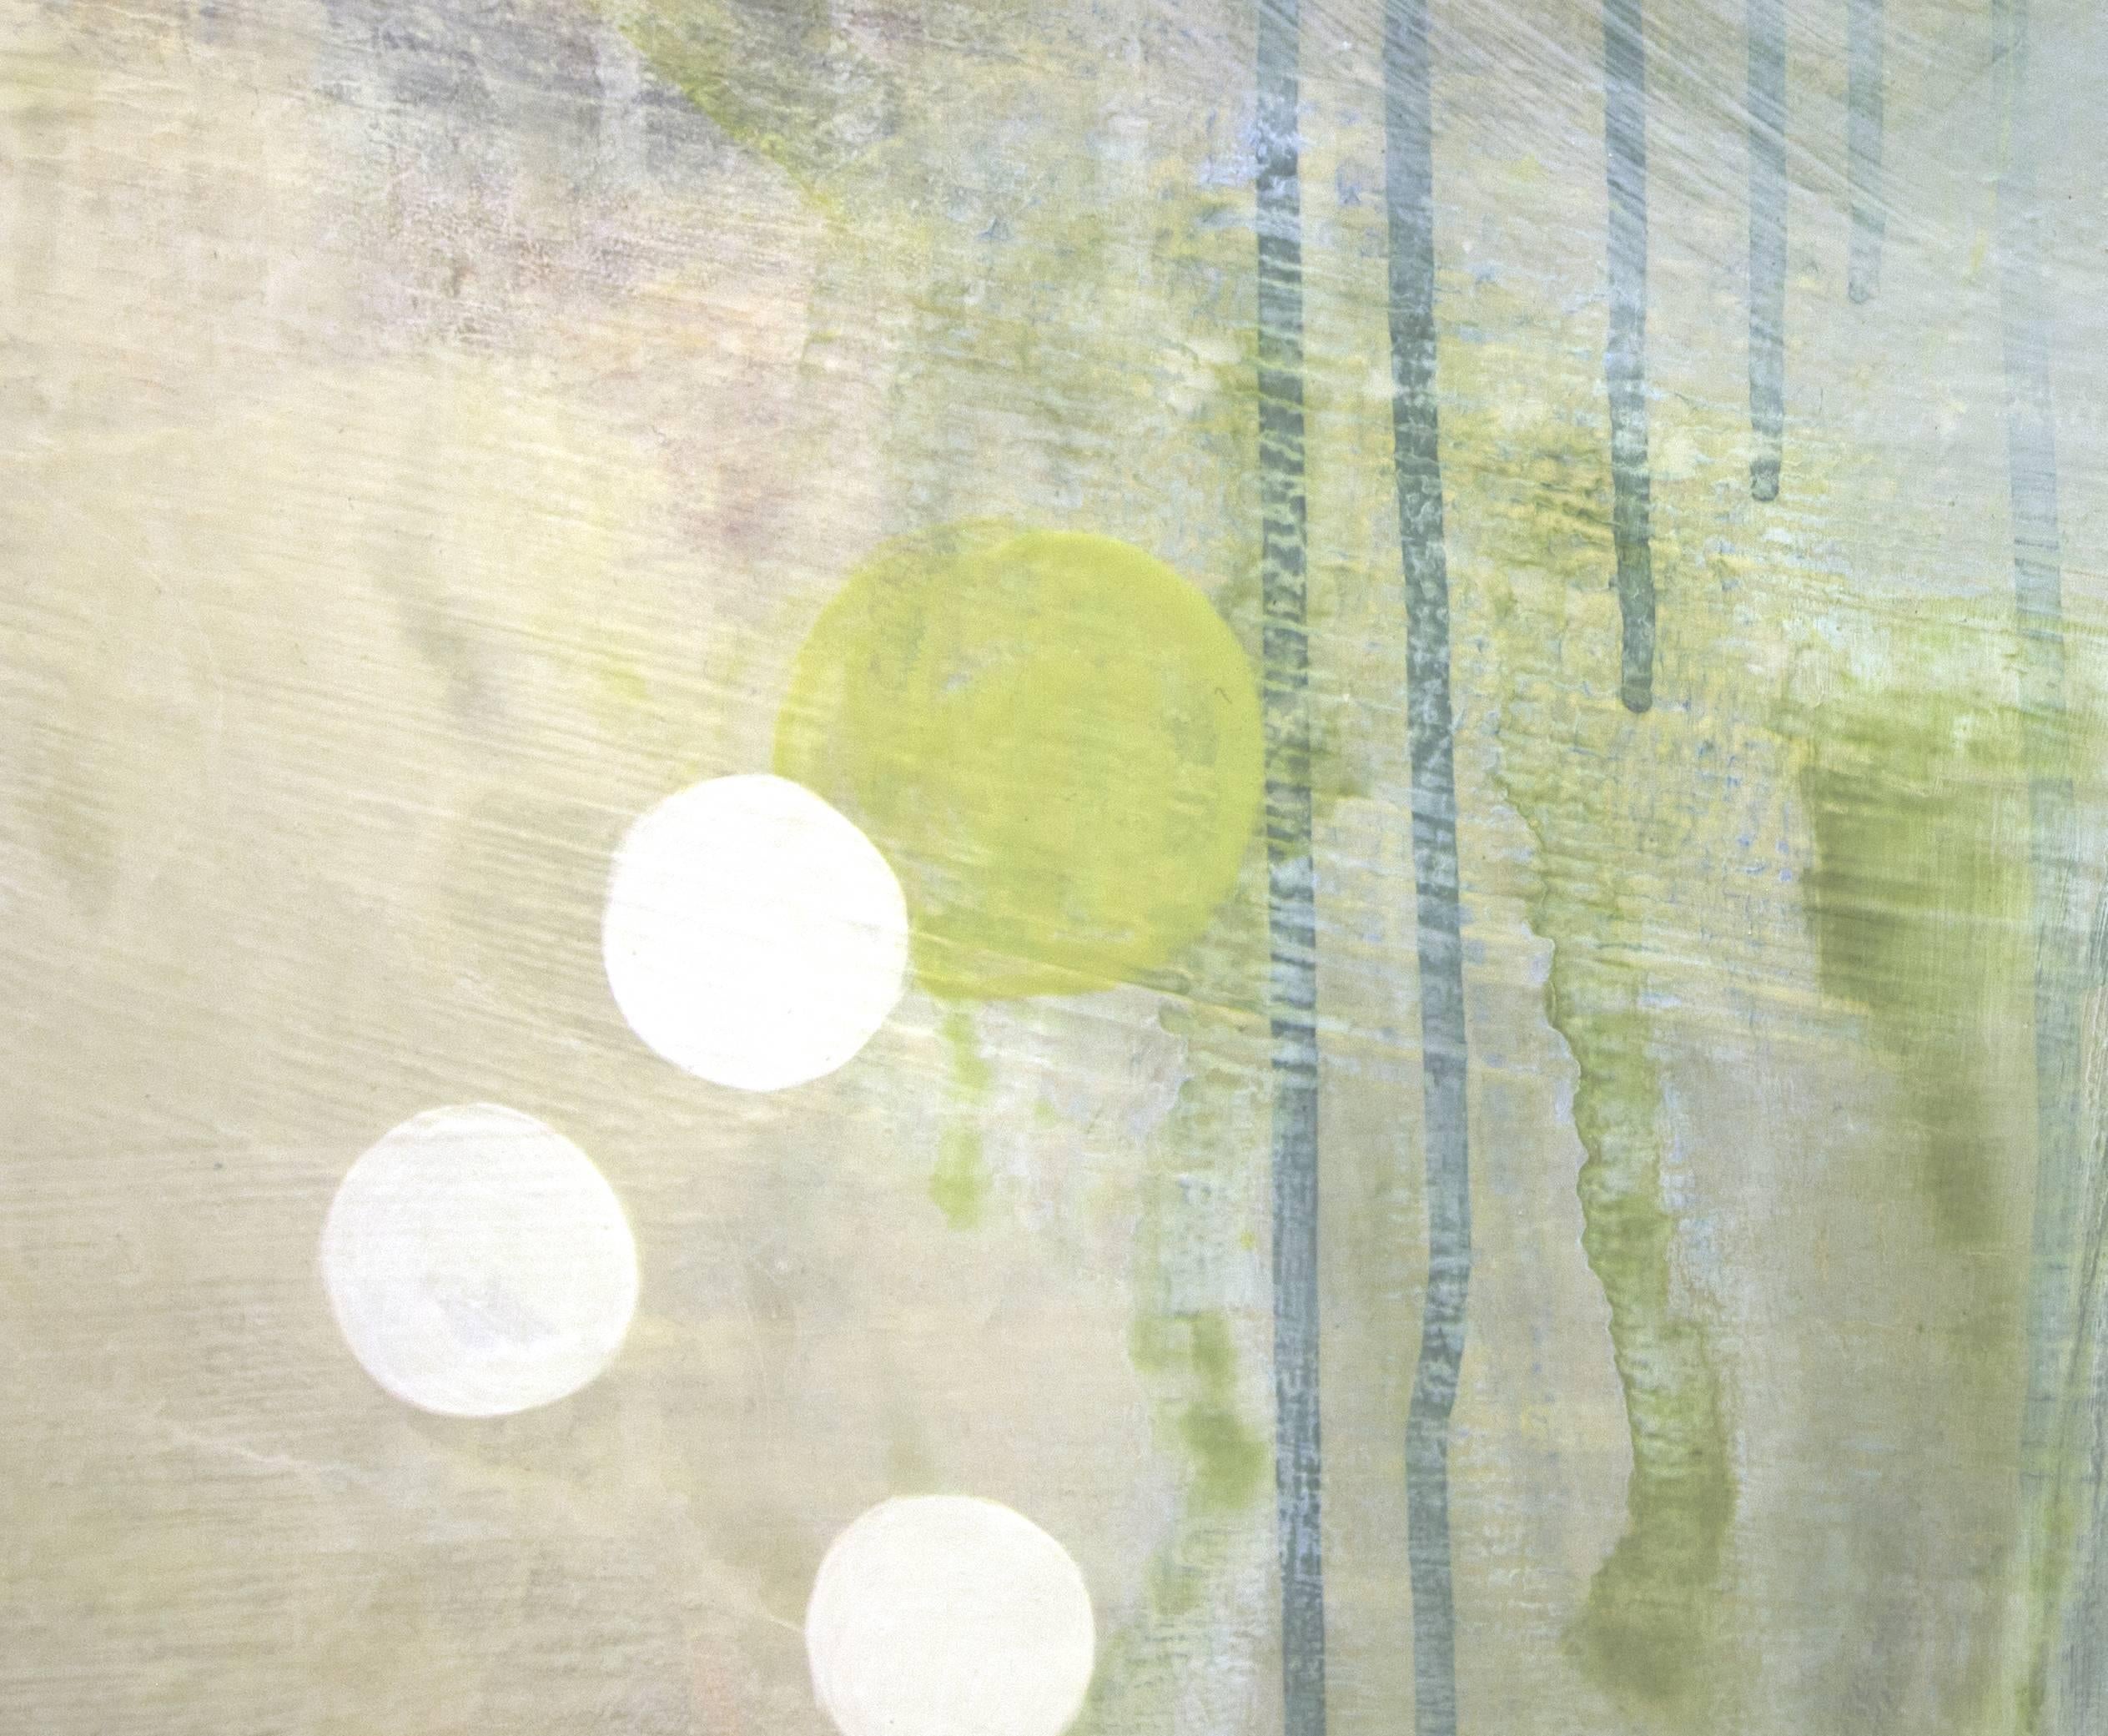 Terri Dilling
Marshland, 2013
Acrylic and mixed media on panel
40 x 40 in. (101.6 x 101.6 cm)